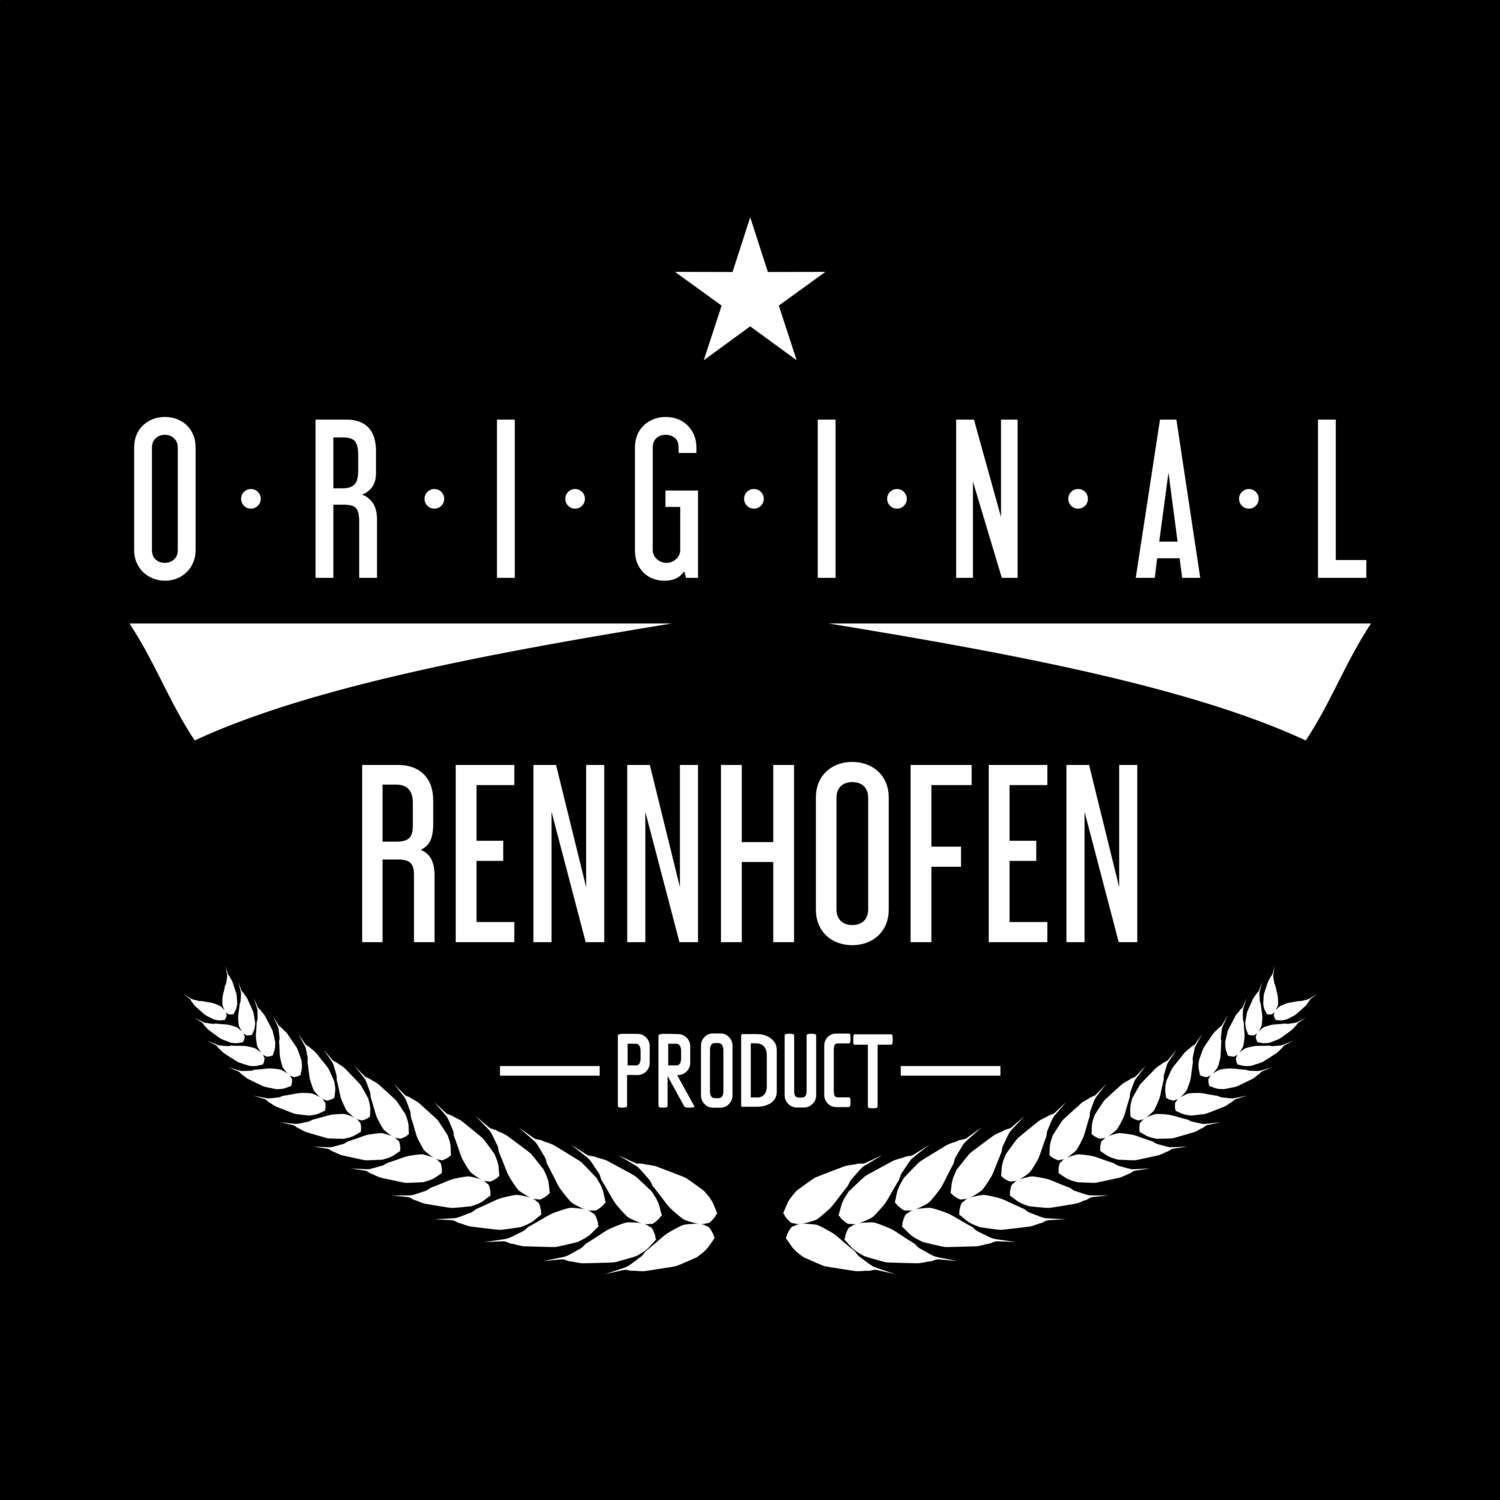 Rennhofen T-Shirt »Original Product«